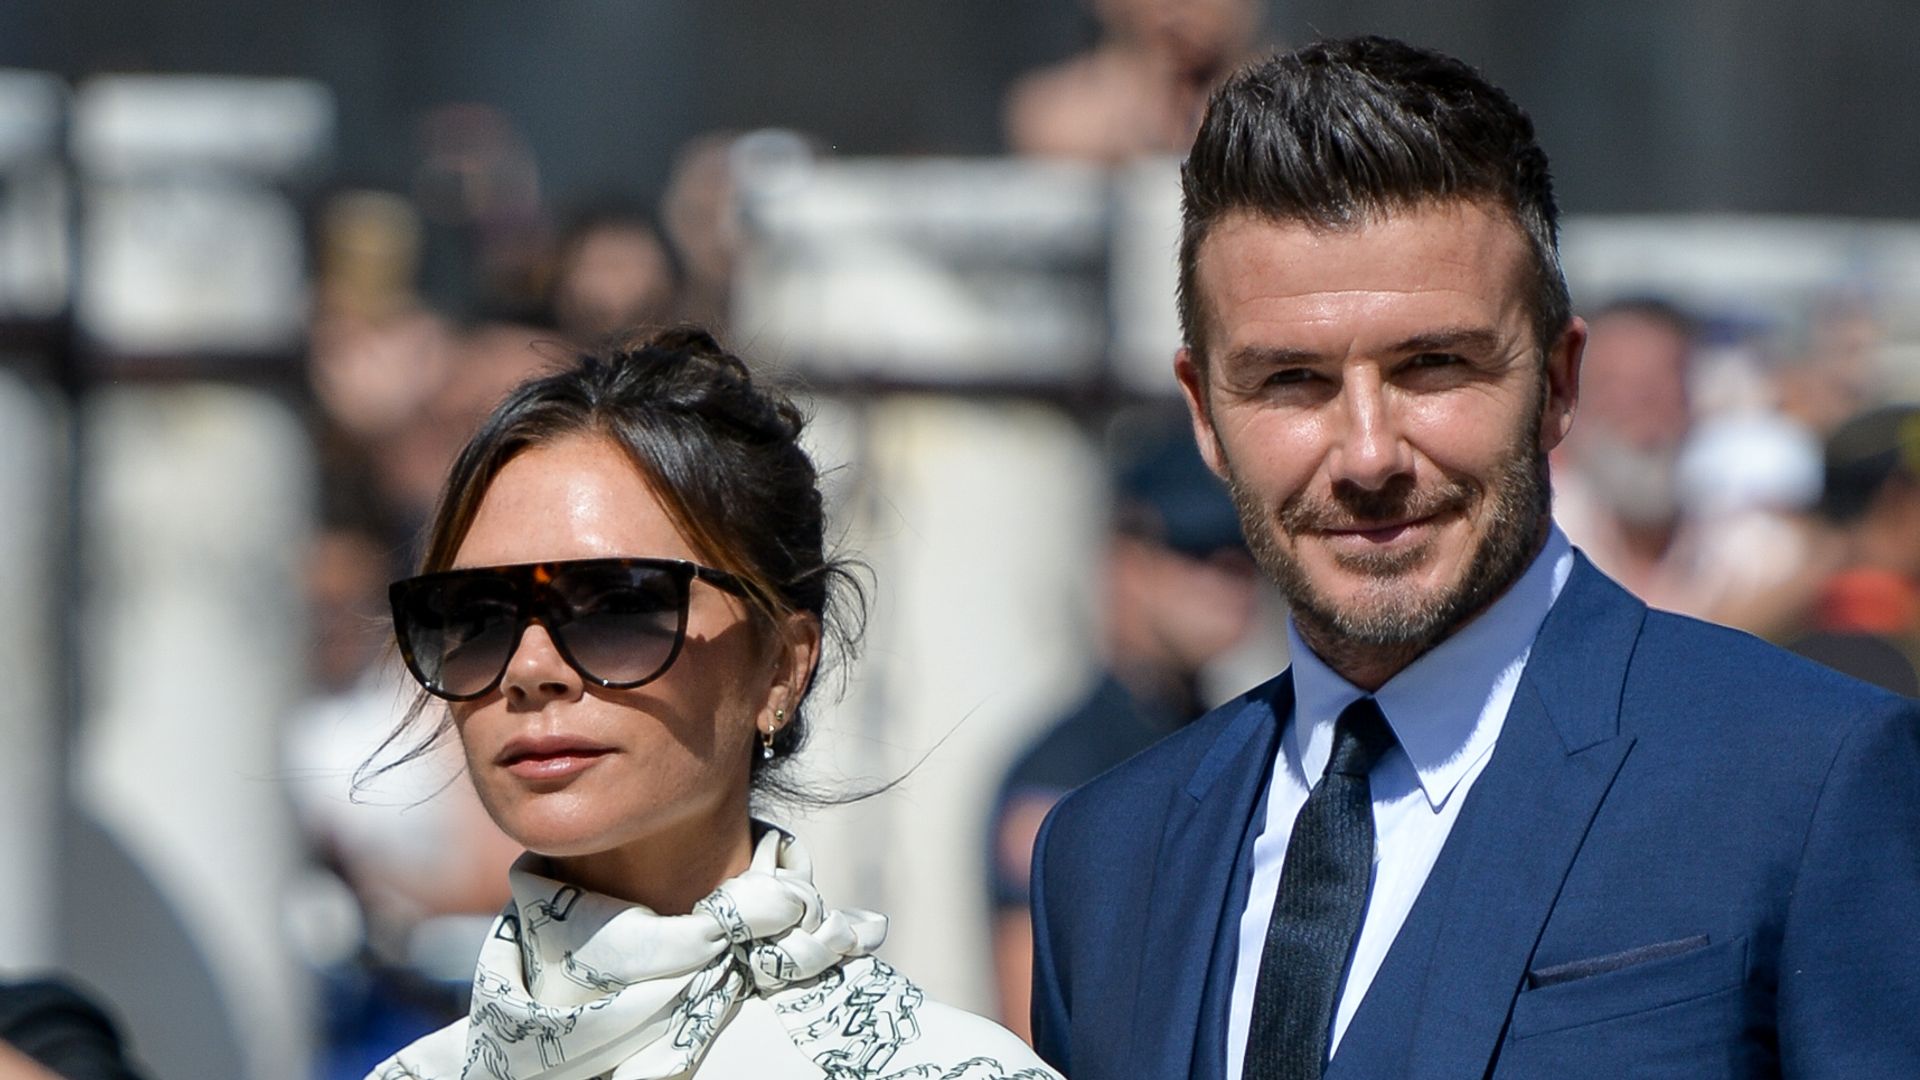 Victoria Beckham stood with David Beckham